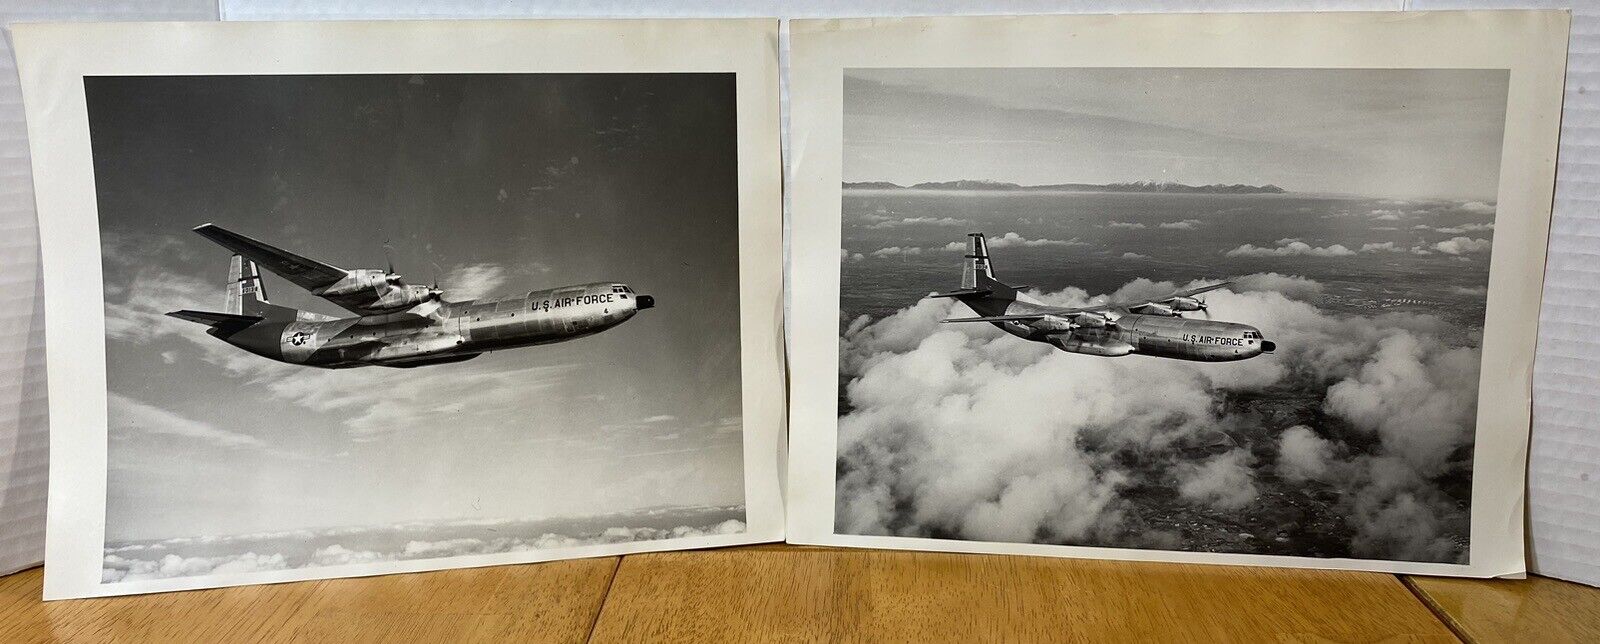 DOUGLAS C-133 CARGOMASTER  U.S AIR FORCE Vintage Photos Print